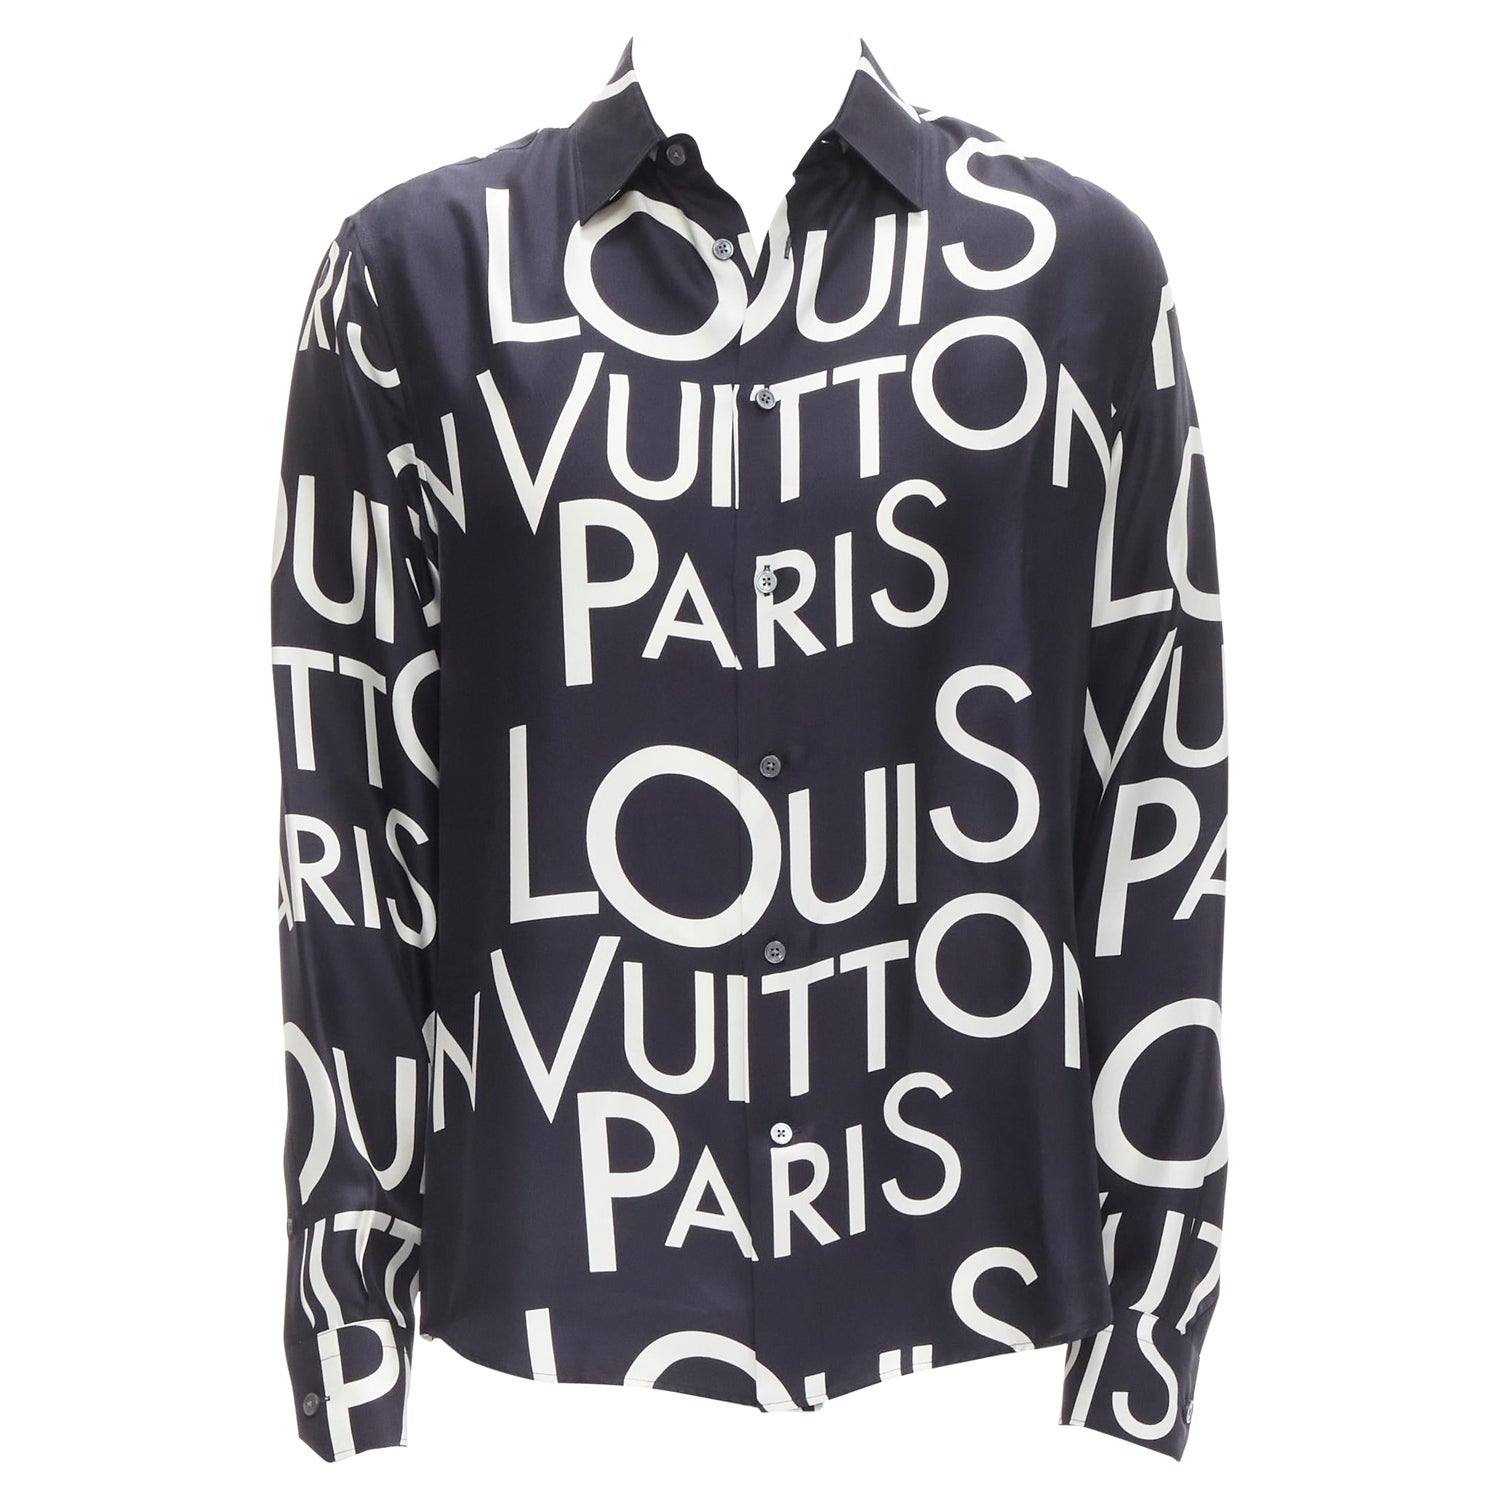 Louis Vuitton Paris Shirts - 2 For Sale on 1stDibs | louis vuitton paris  tshirt, paris louis vuitton trikot, lv made shirt